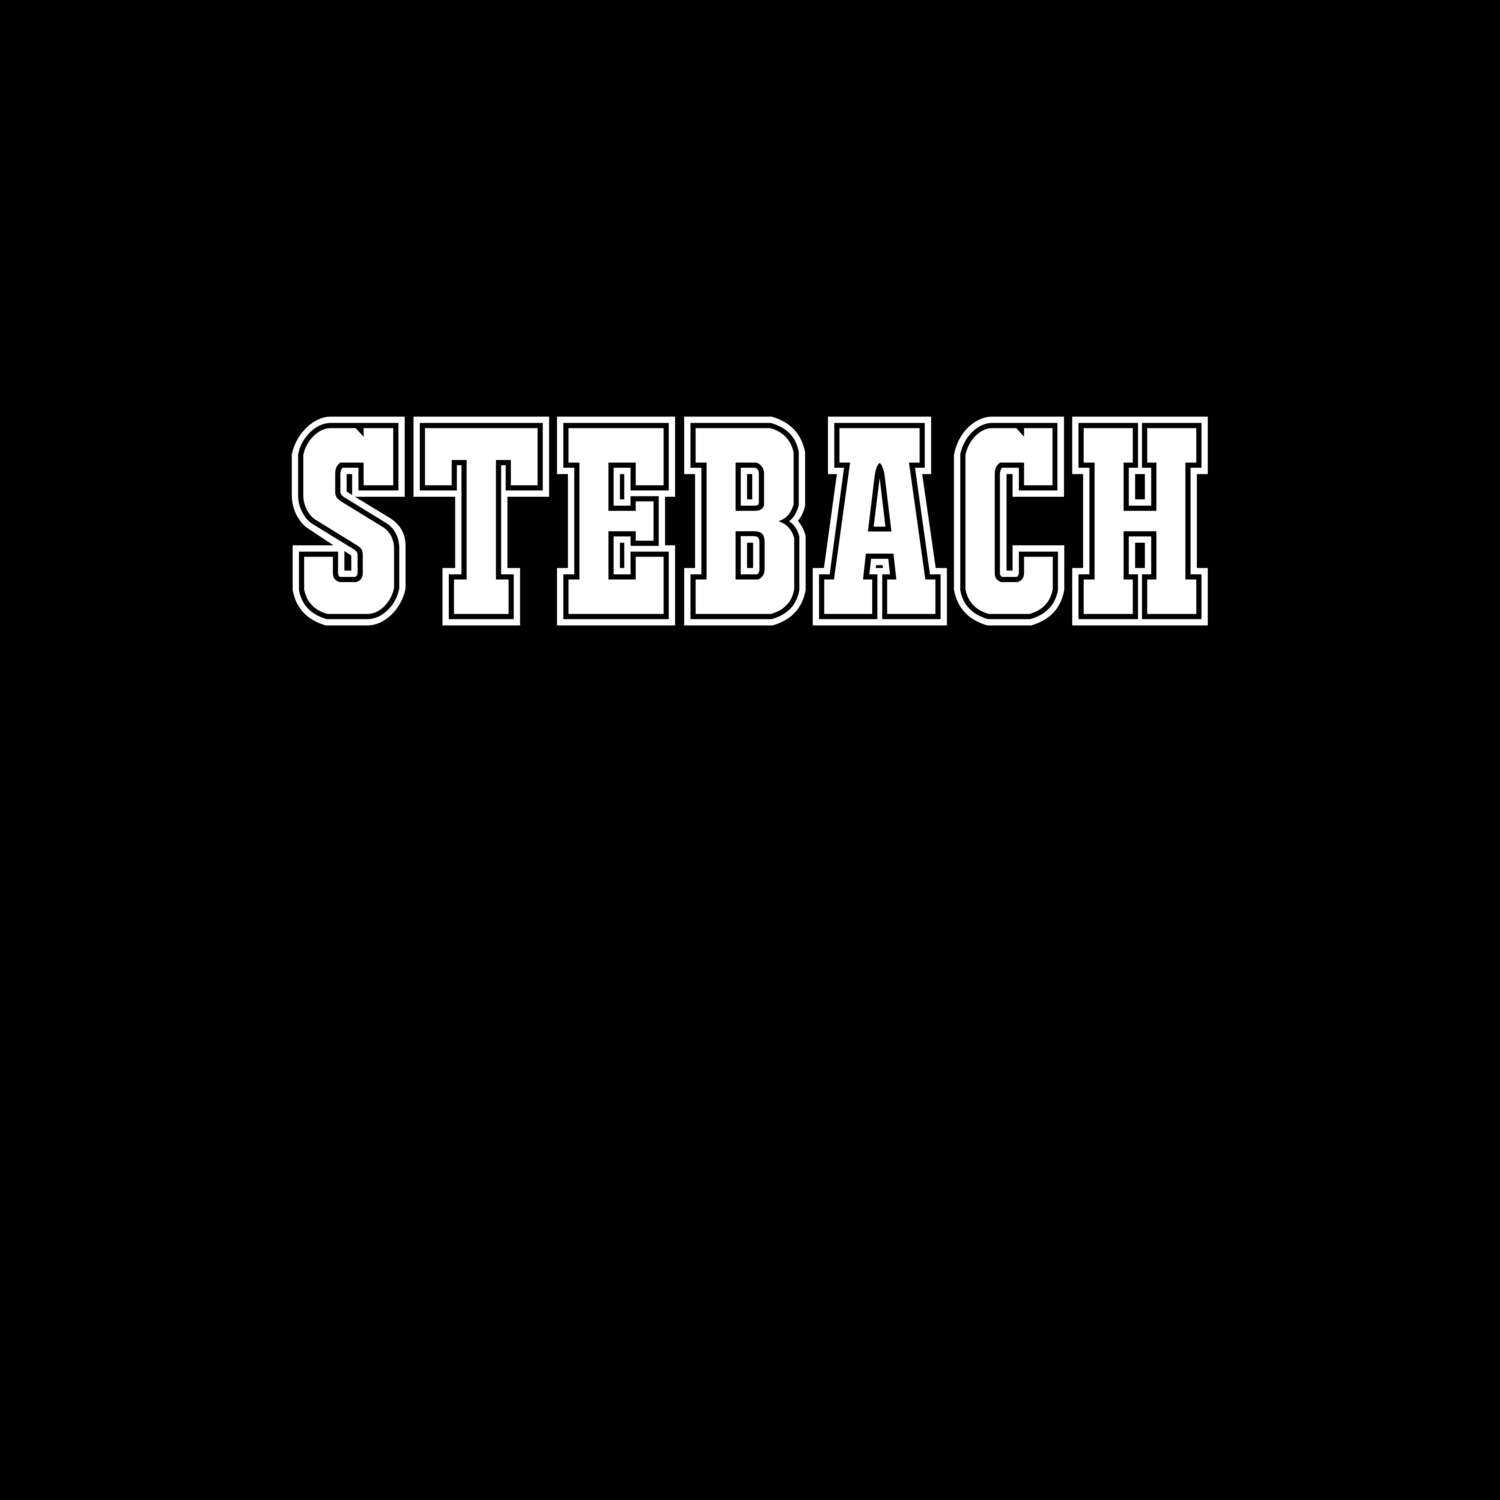 Stebach T-Shirt »Classic«